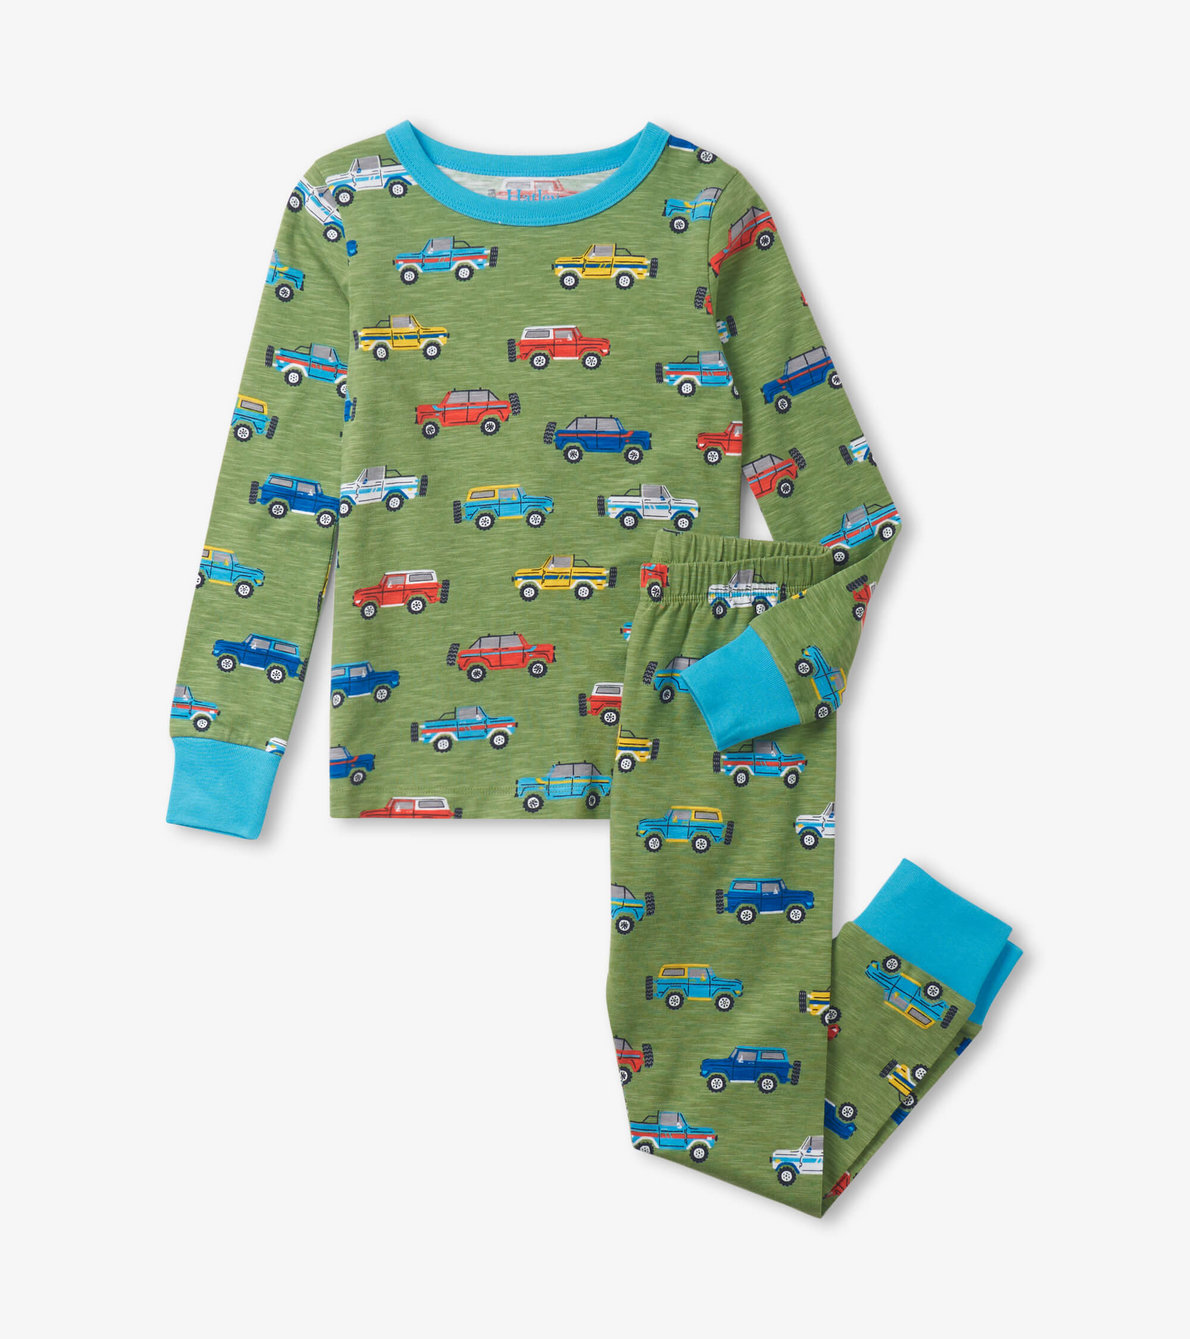 View larger image of Boys Off Roading Pajama Set